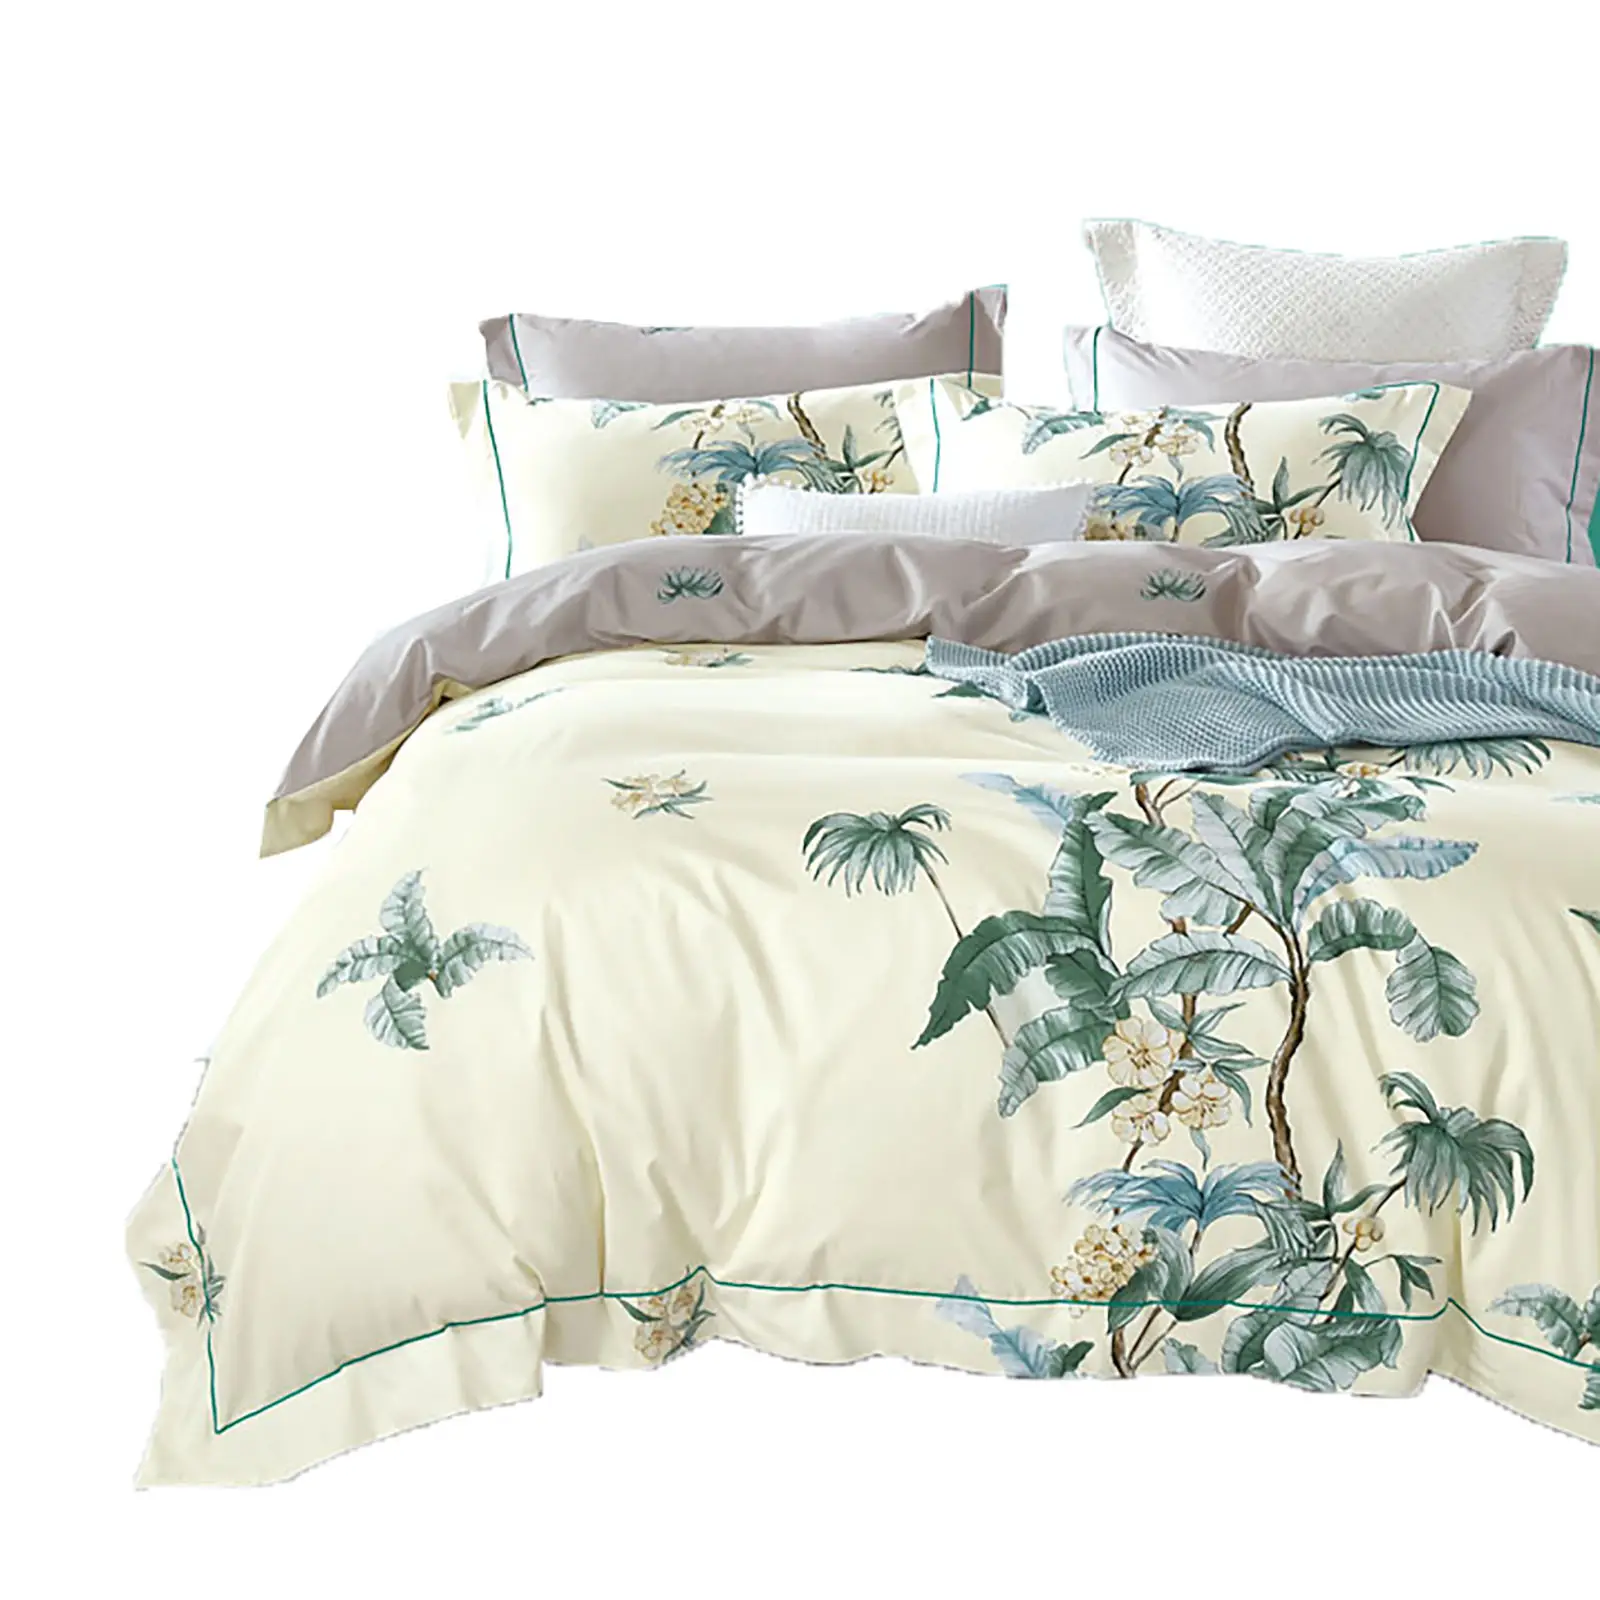 bed sheet 100% cotton printed fashion luxury flowers Eastern Europe flat sheet